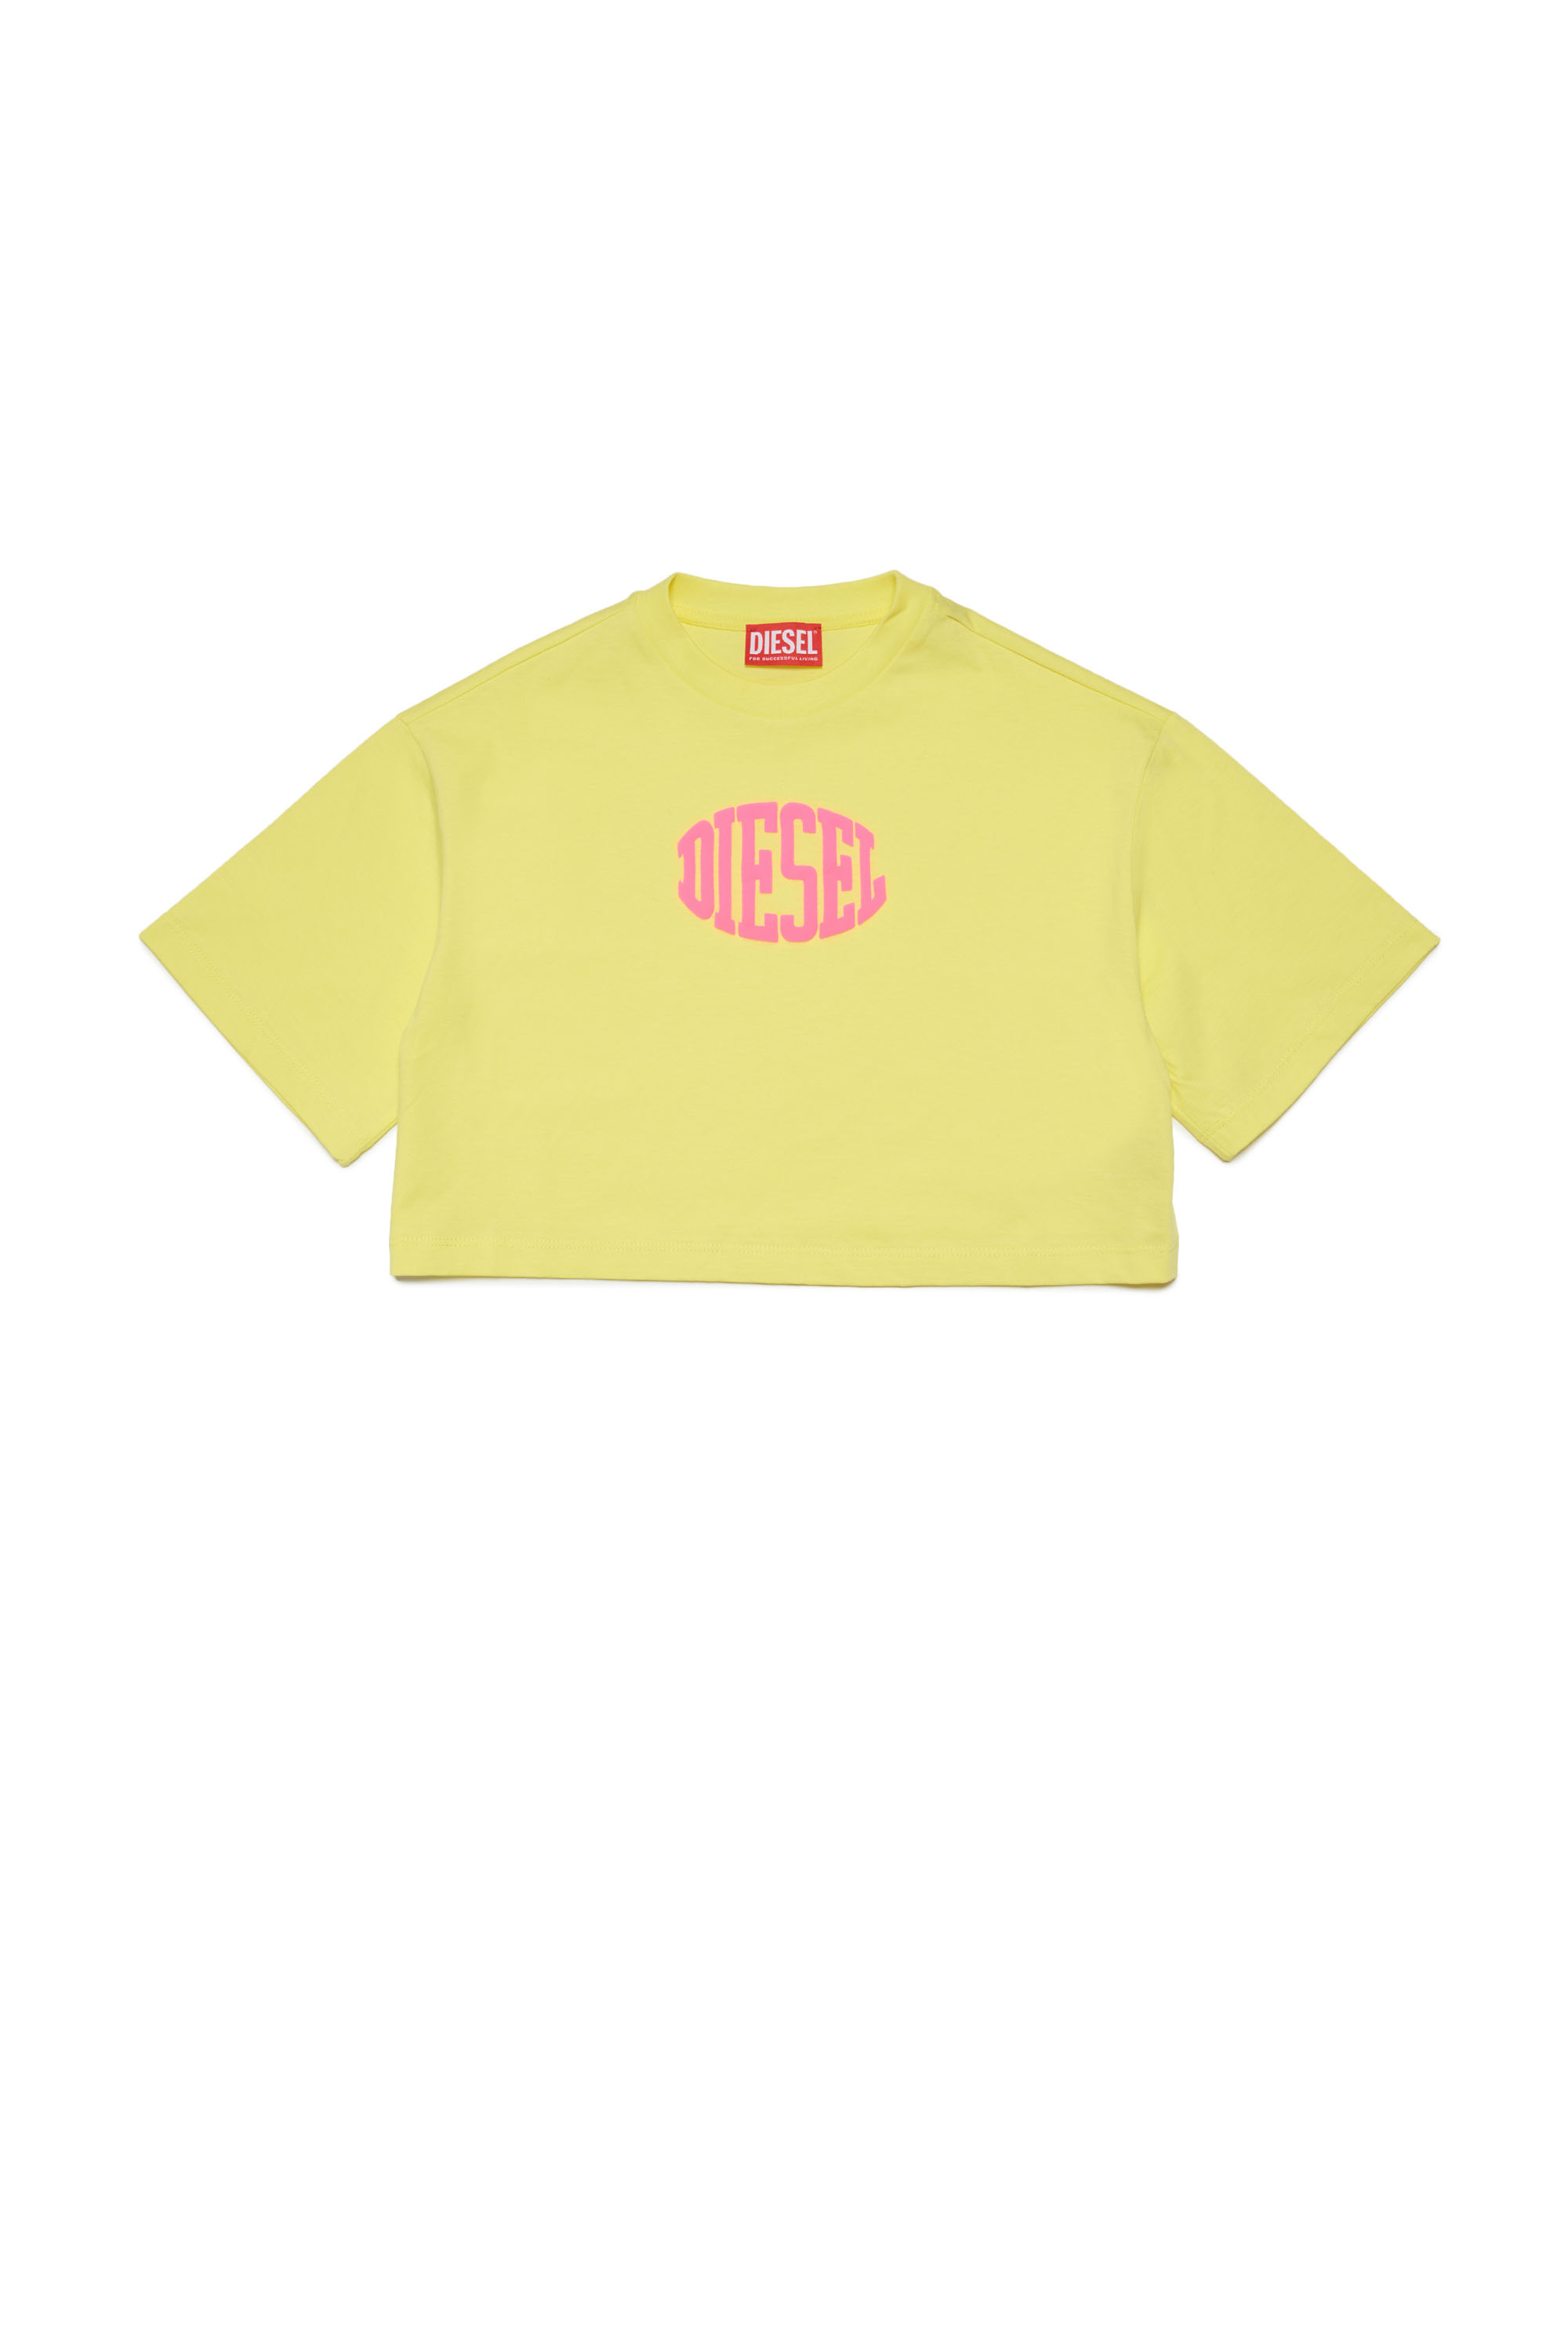 TARKI, Yellow - Tシャツ・カットソー